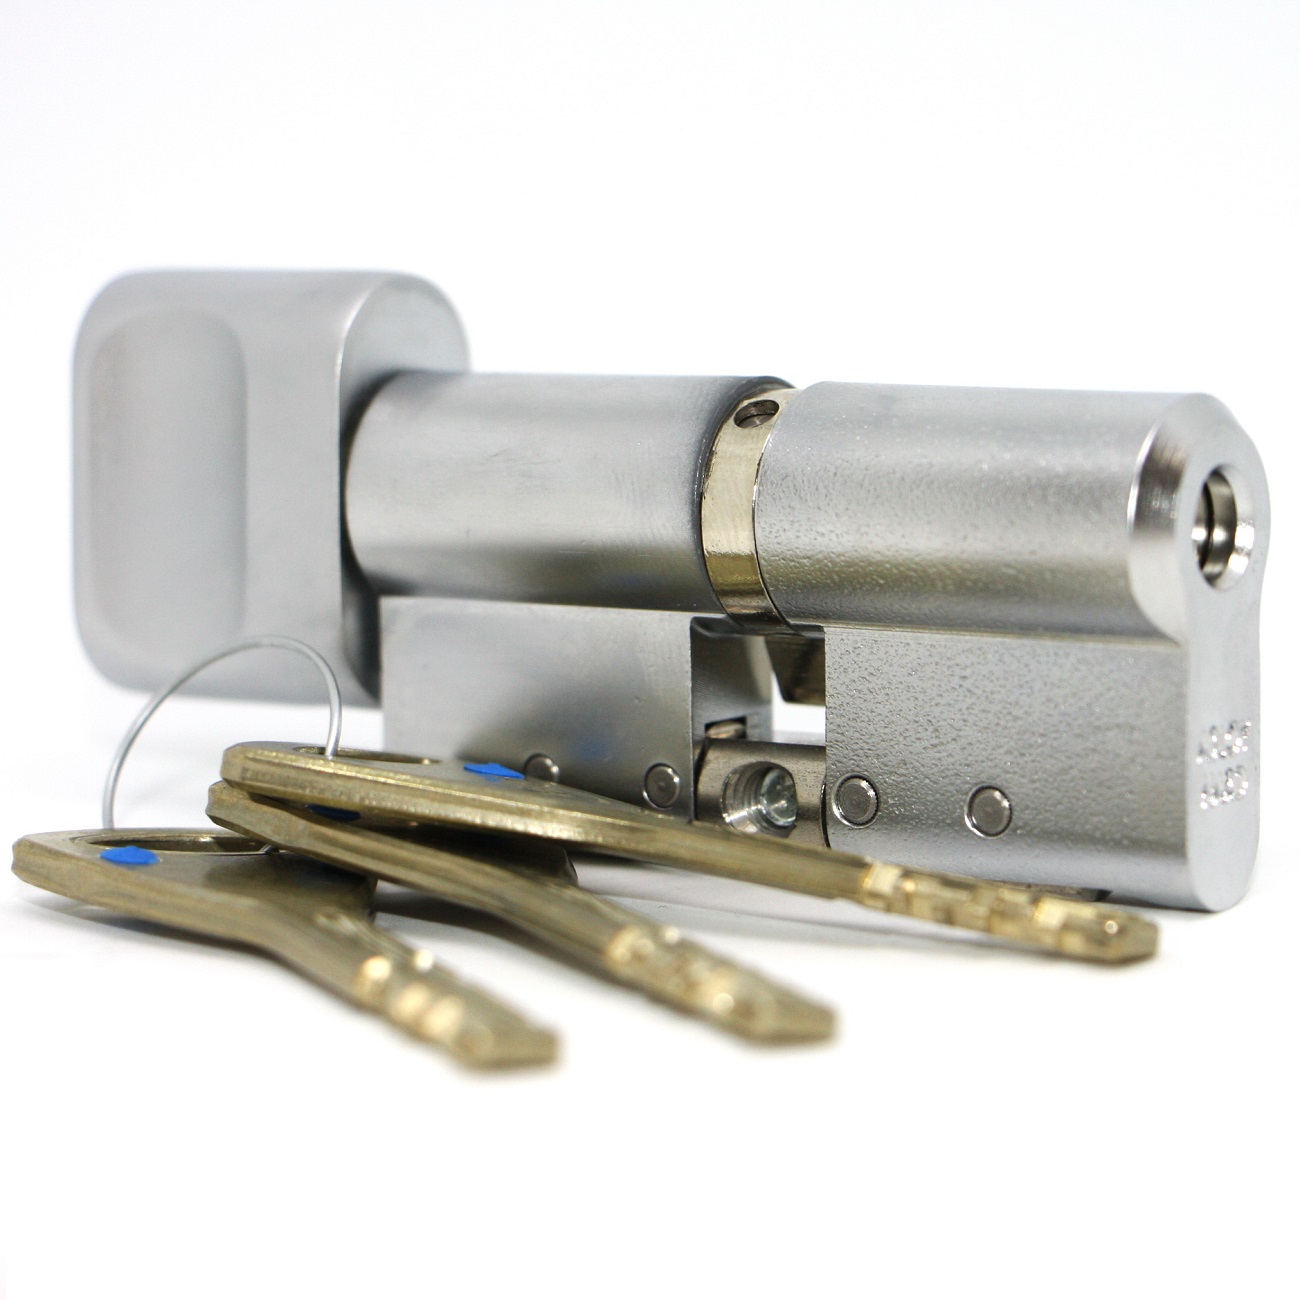 CY 333 N  satin chrome/ цилиндр ключ+поворотная кнопка (закаленная сталь) от производителя Аблой